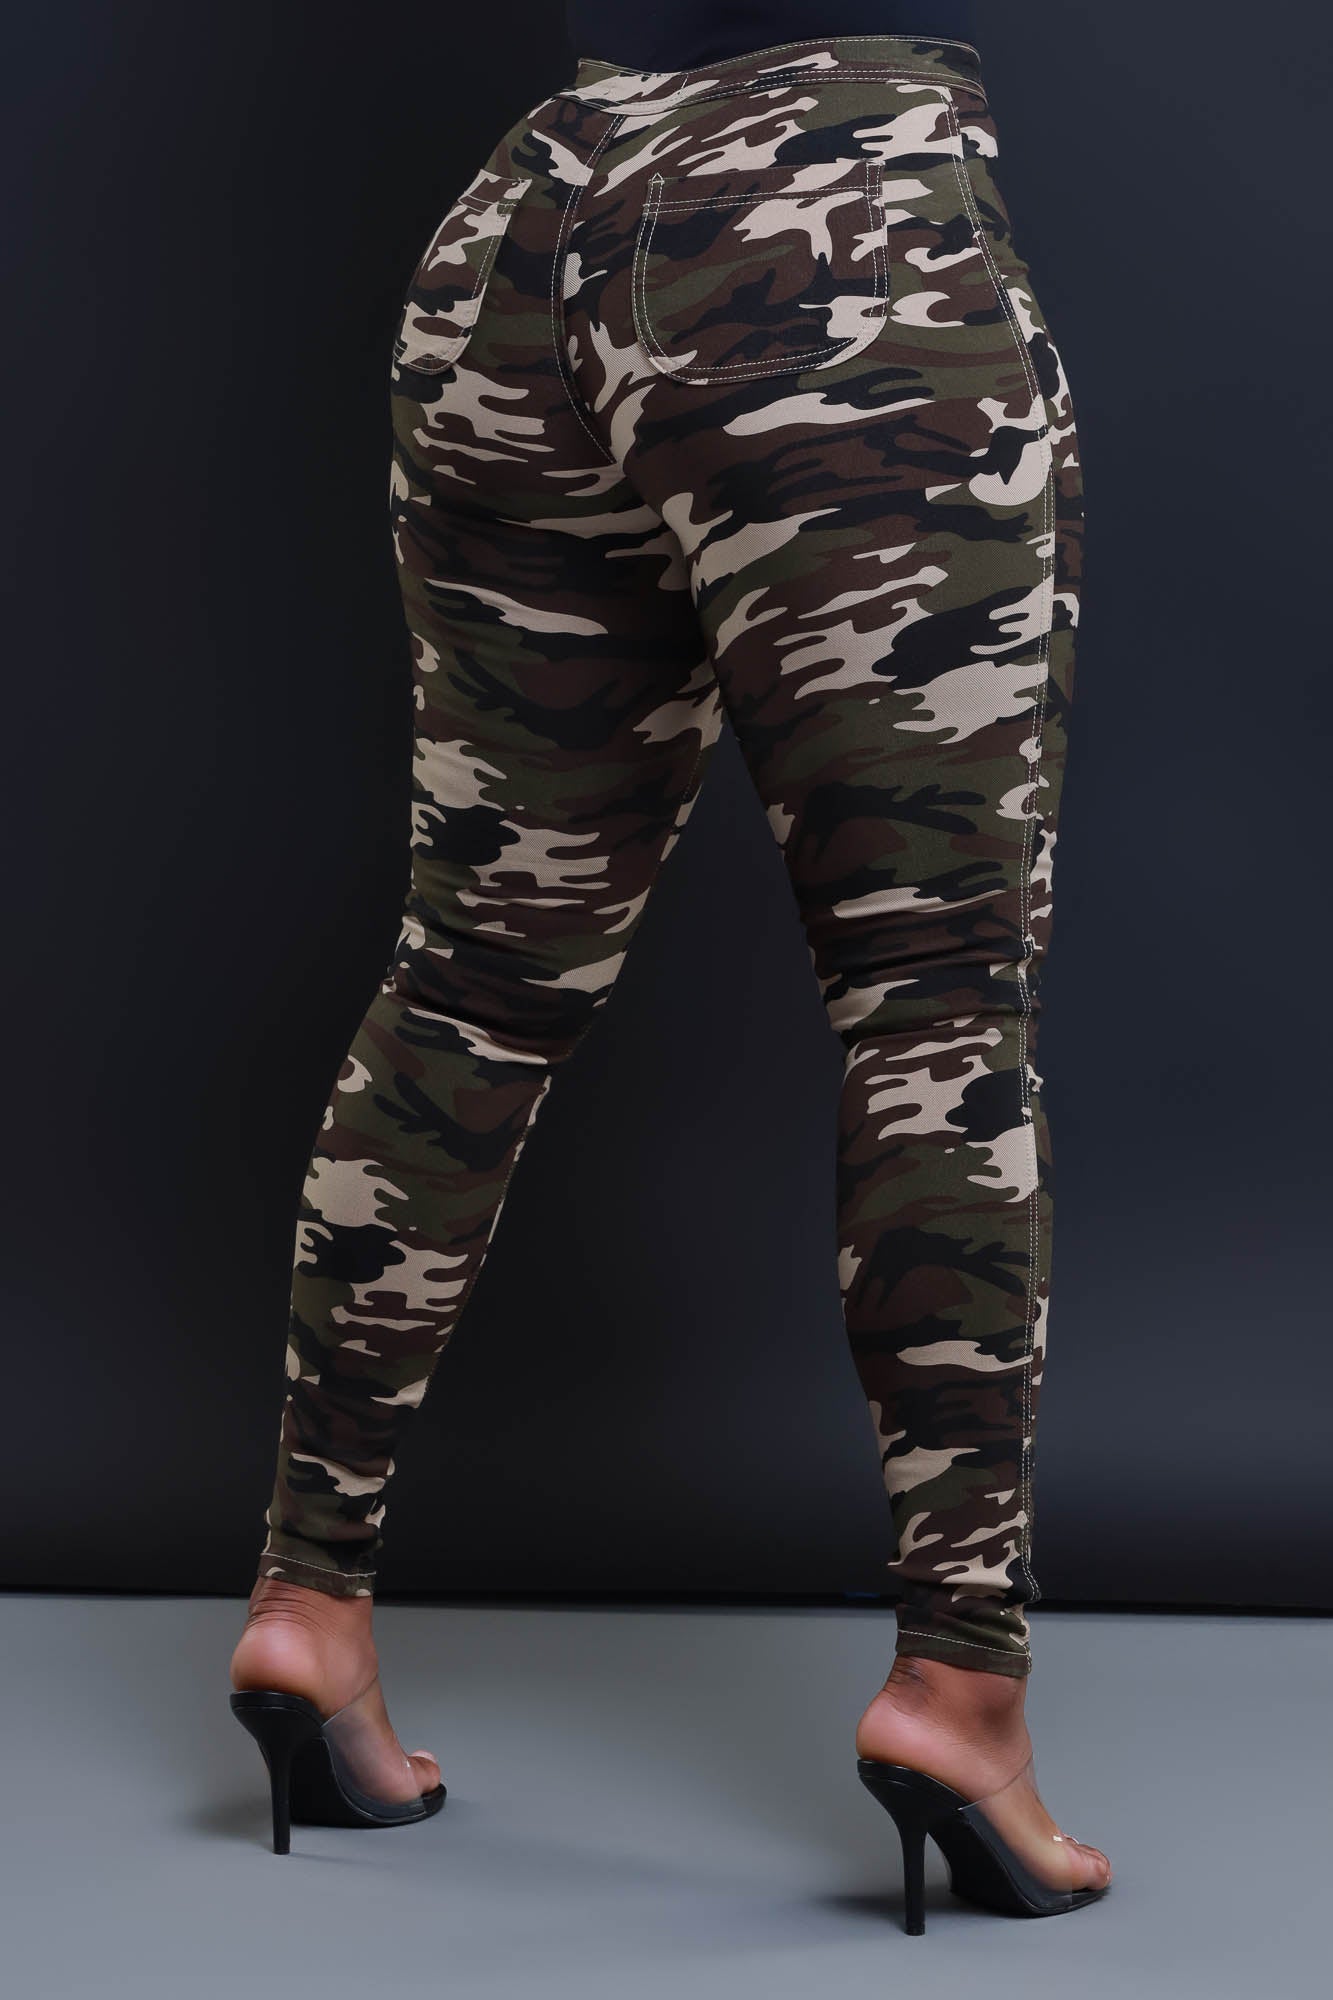 Highwaist camouflage pocket leggings available in stock size 10